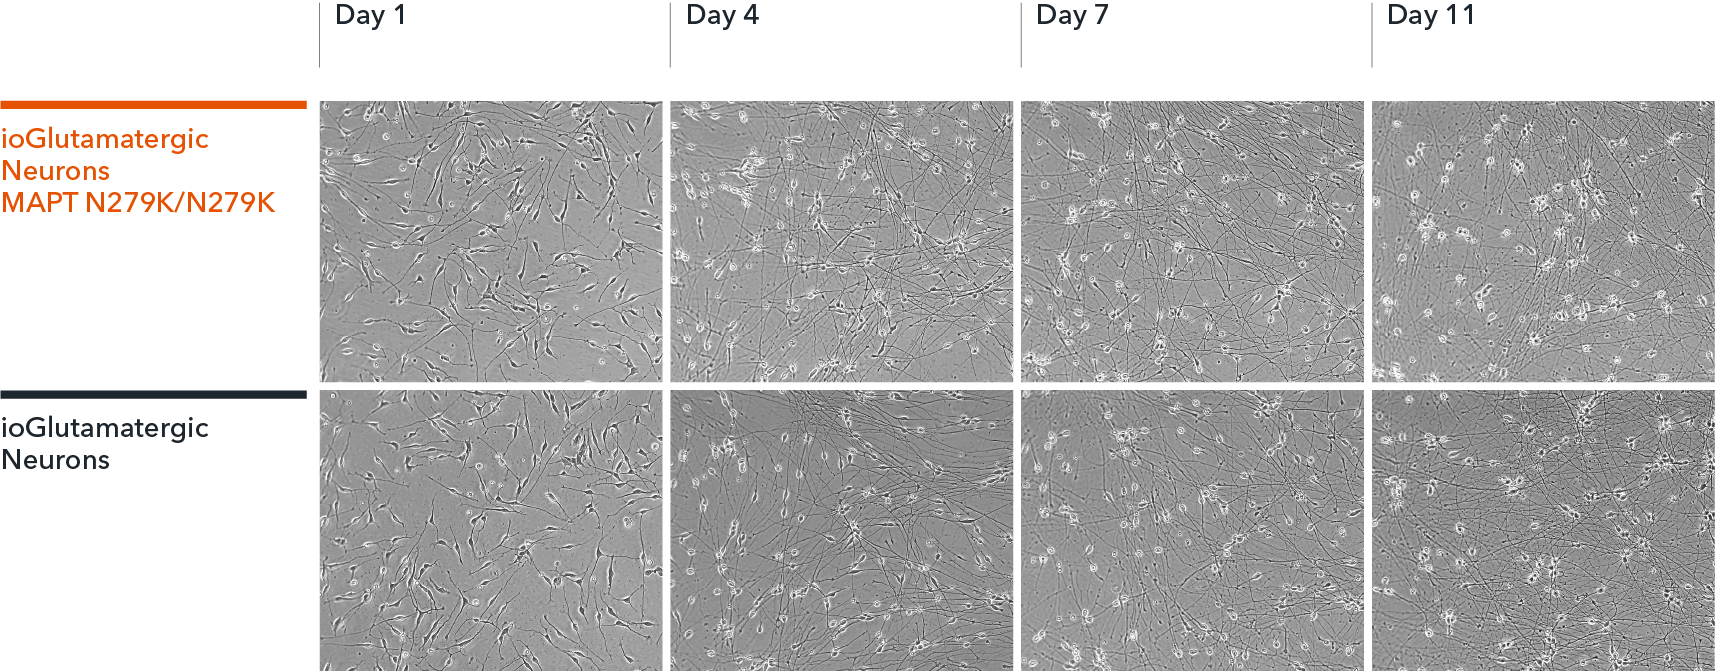 ioGlutamatergic Neurons MAPT N279K/N279K disease model cells morphology by brightfield imaging over 11 days post-revival